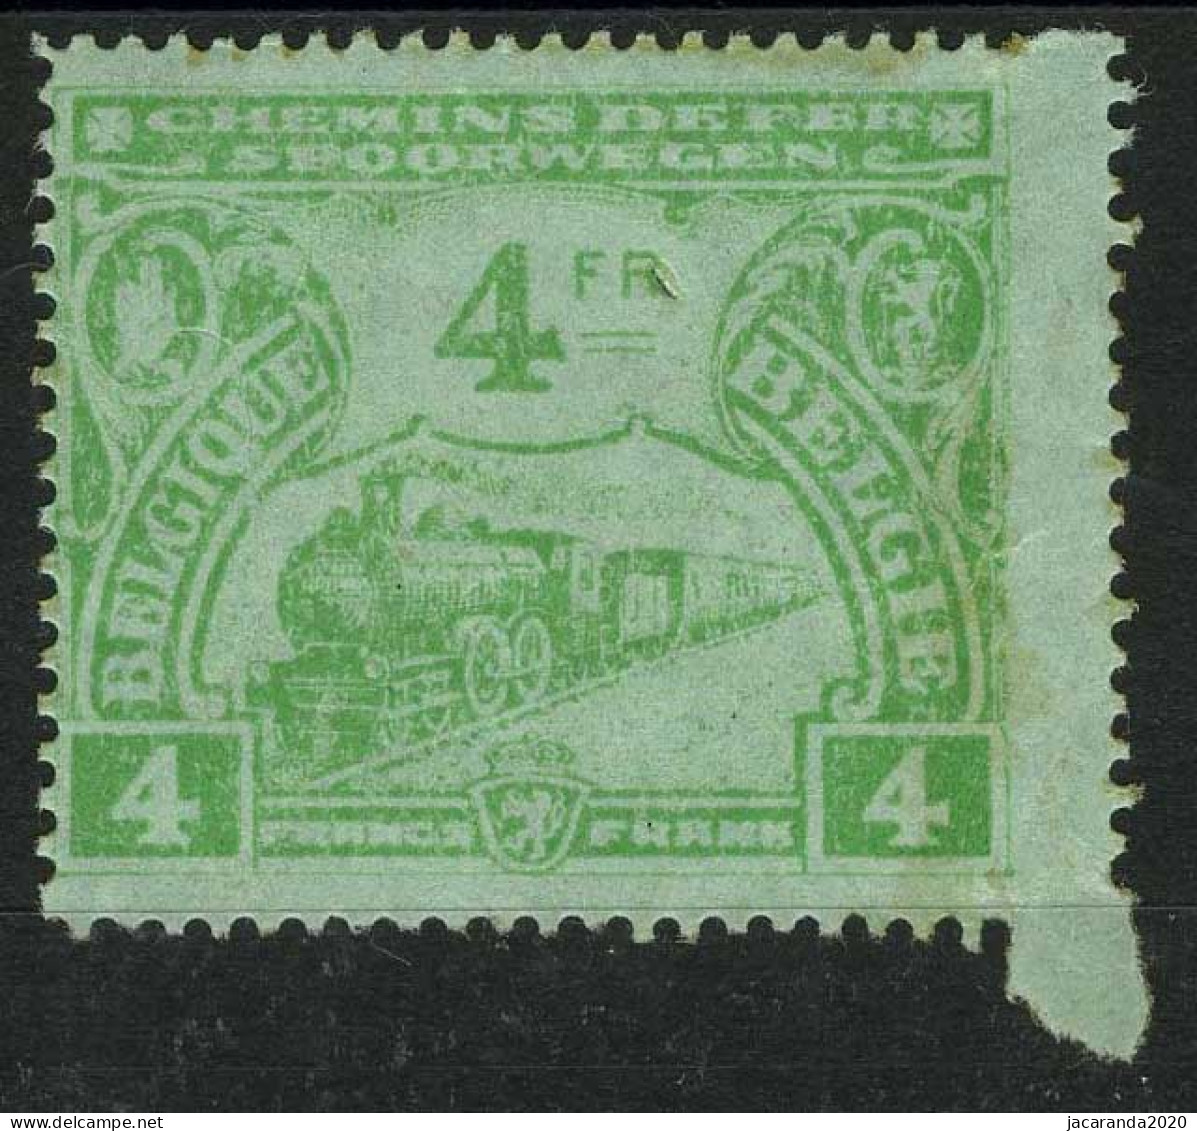 België TR122 (**/*) - Spoorwegzegel Met Tandingfout - Timbre Chemins De Fer Avec Erreur De Perforation - 1901-1930